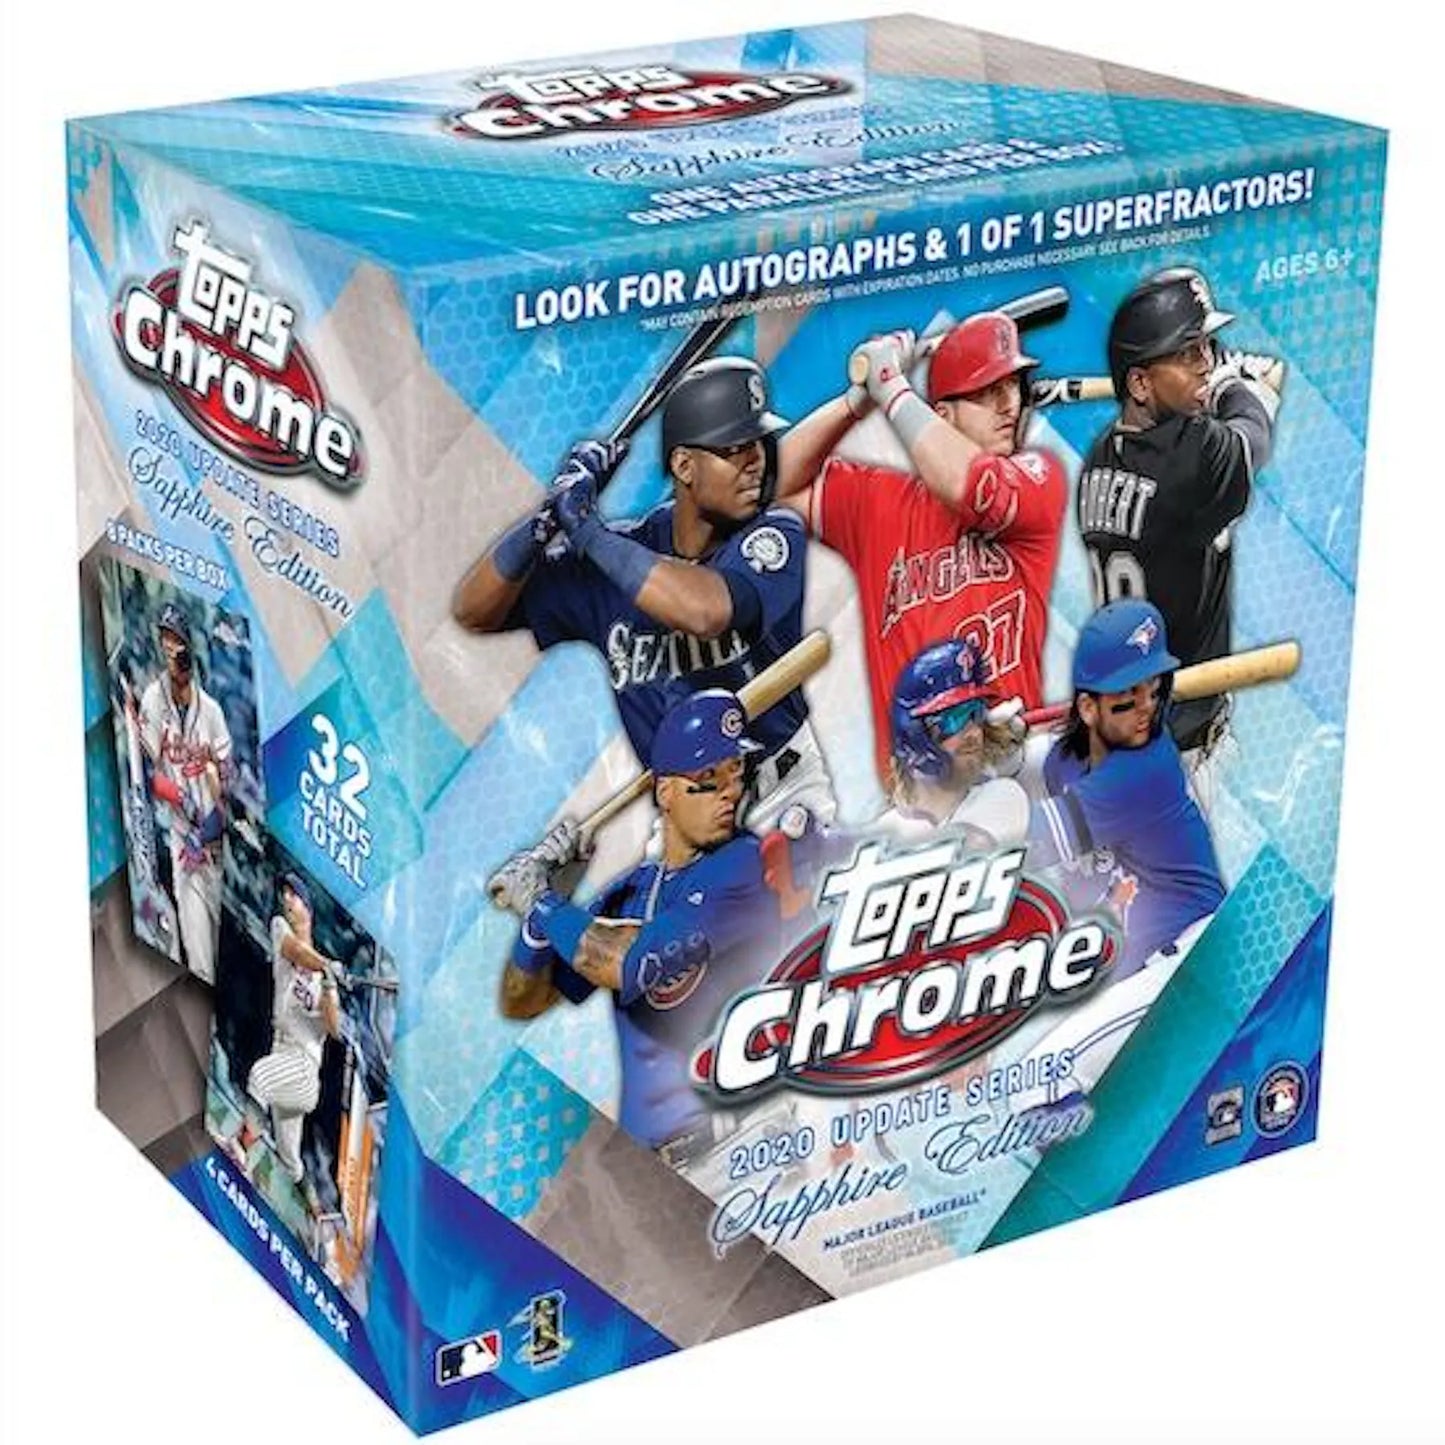 2020 Topps Chrome Update Sapphire Baseball Box